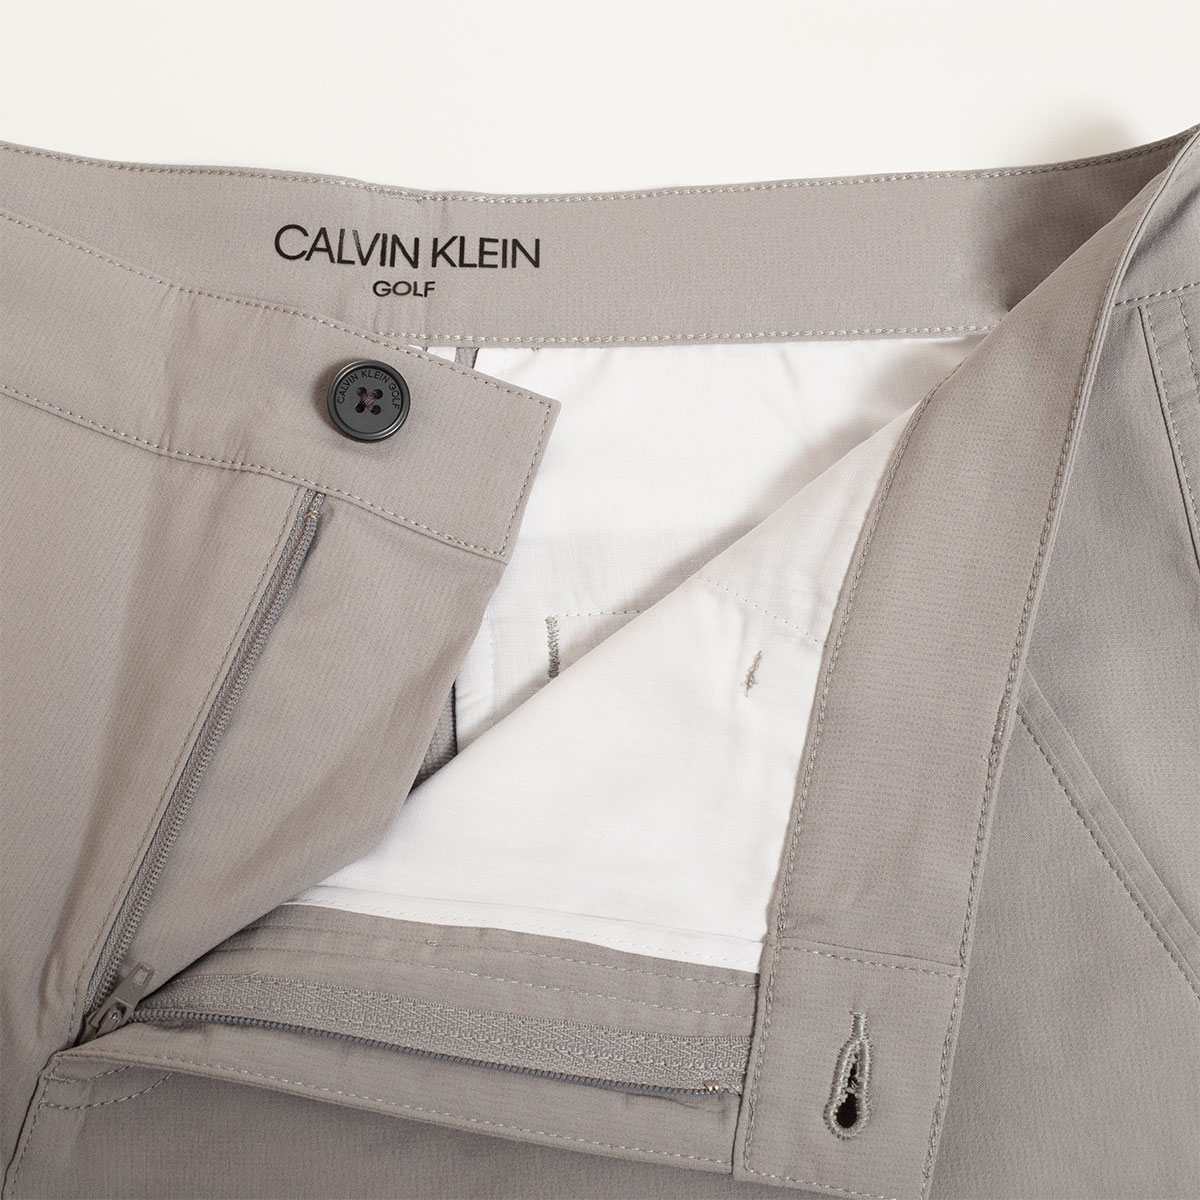 Calvin Klein Men's Micro Tech Stretch Golf Shorts from american golf